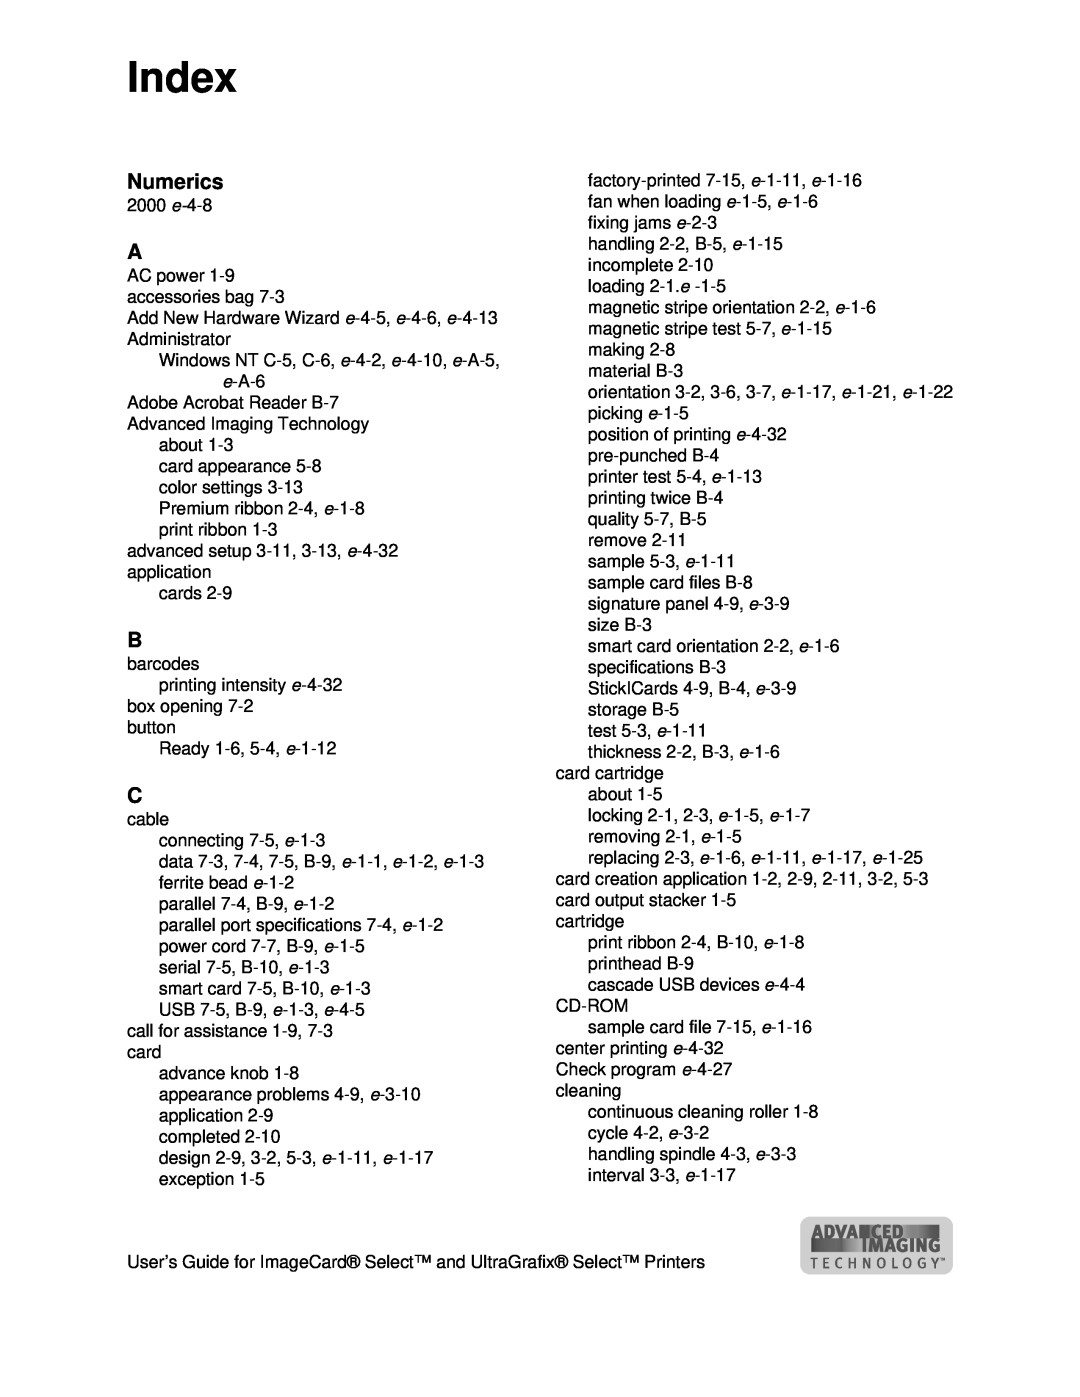 Datacard Group ImageCard SelectTM and UltraGrafix SelectTM Printers manual Index, Numerics 